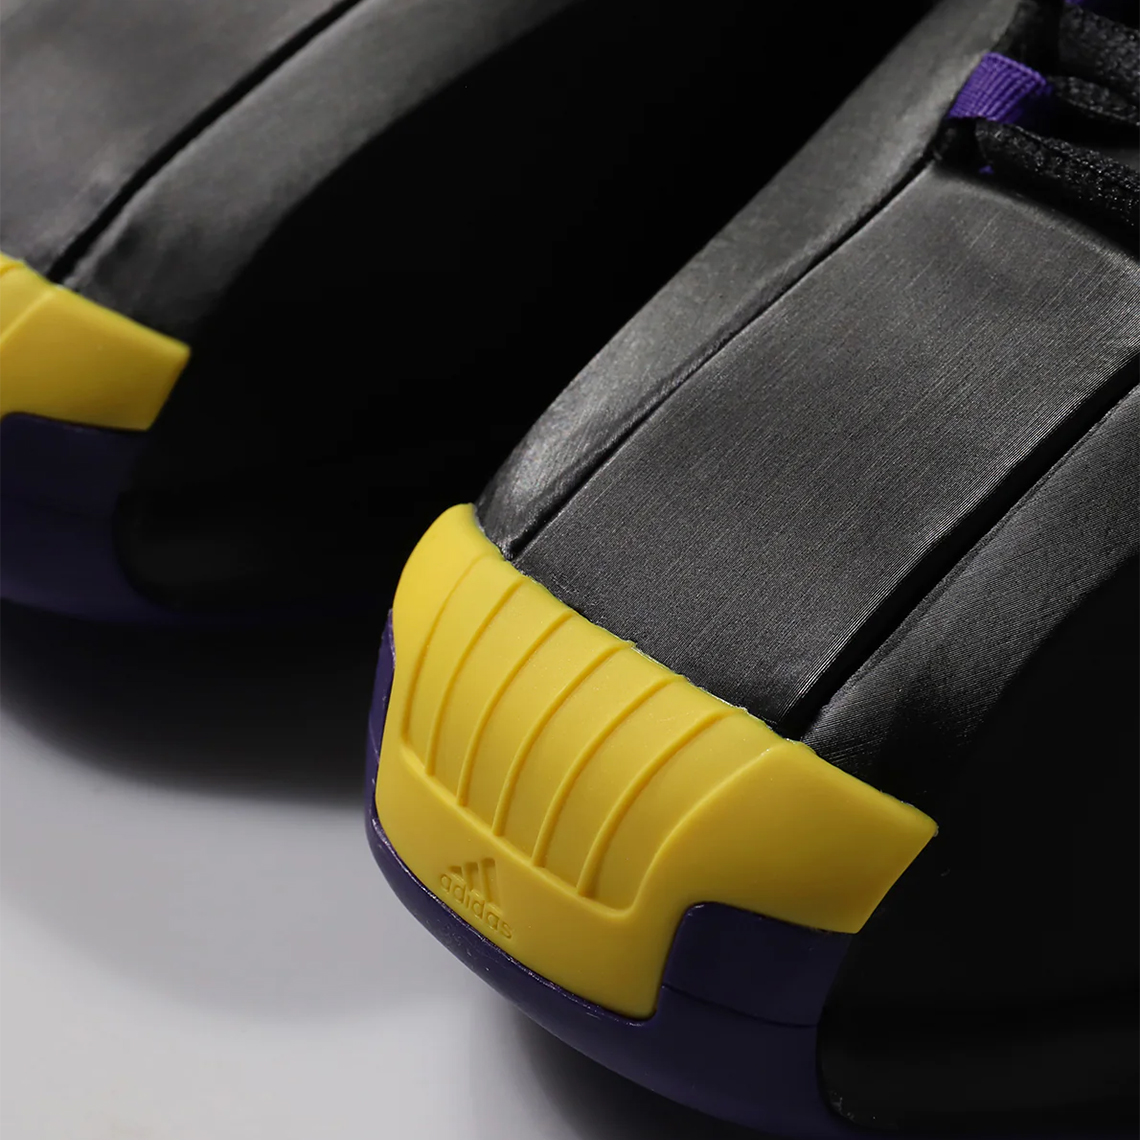 Adidas Crazy 1 Black Purple Yellow Fz6208 3